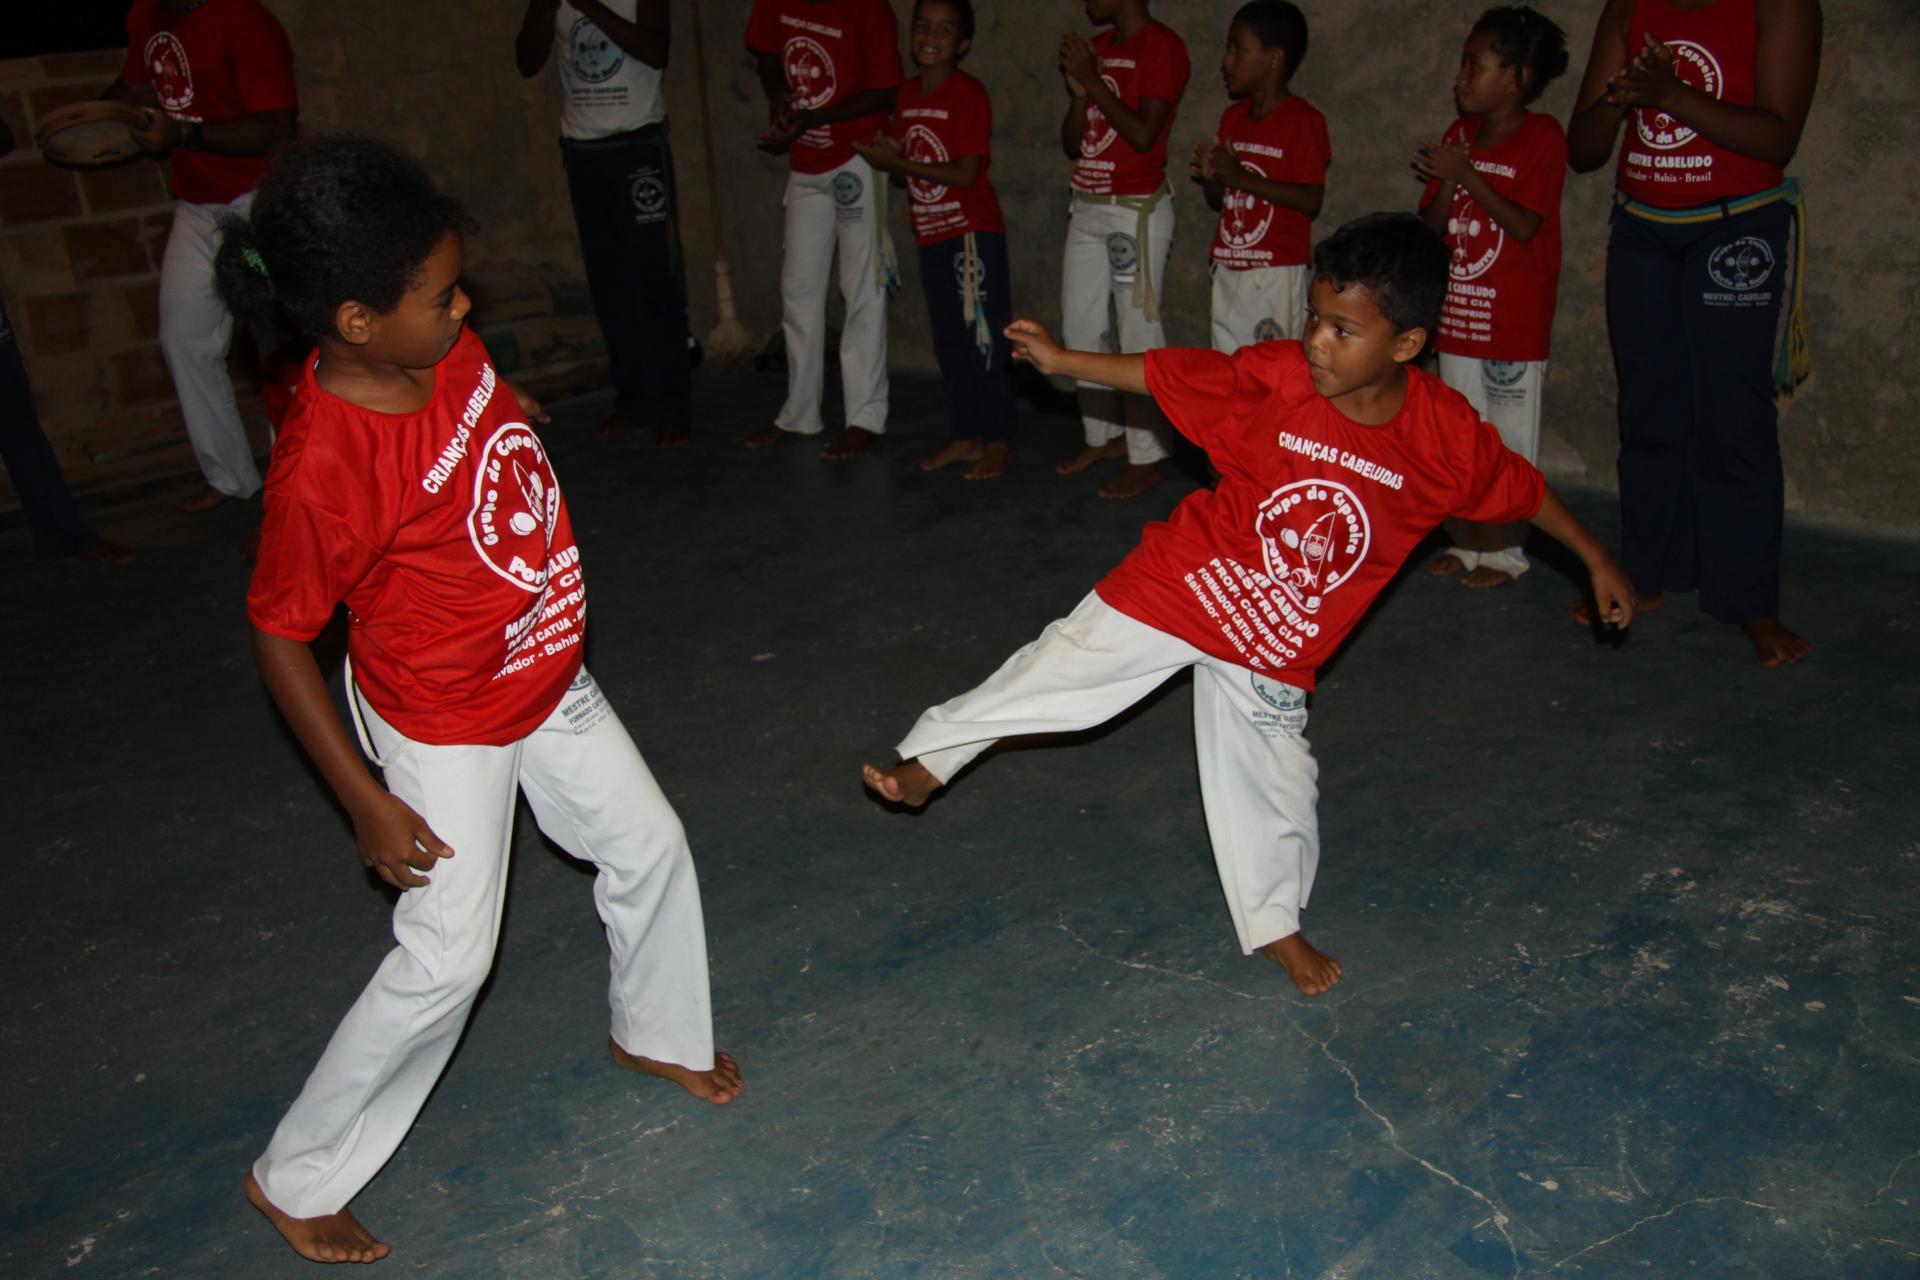 Two children fight in a Capoeira Roda in Imbassai